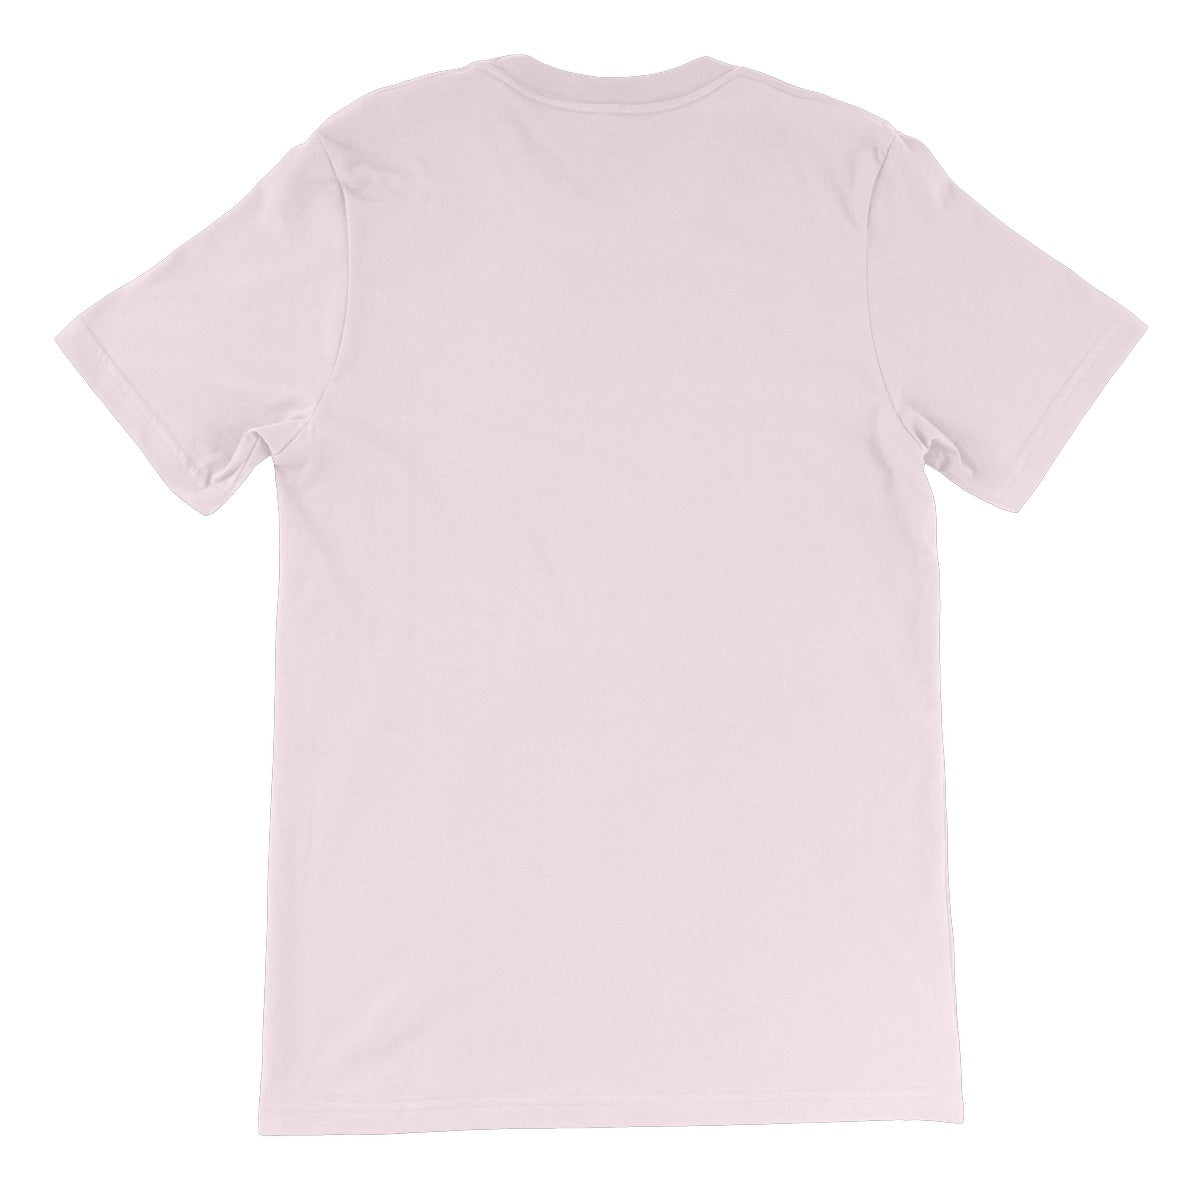 Bladerunner Illustrated Unisex Short Sleeve T-Shirt